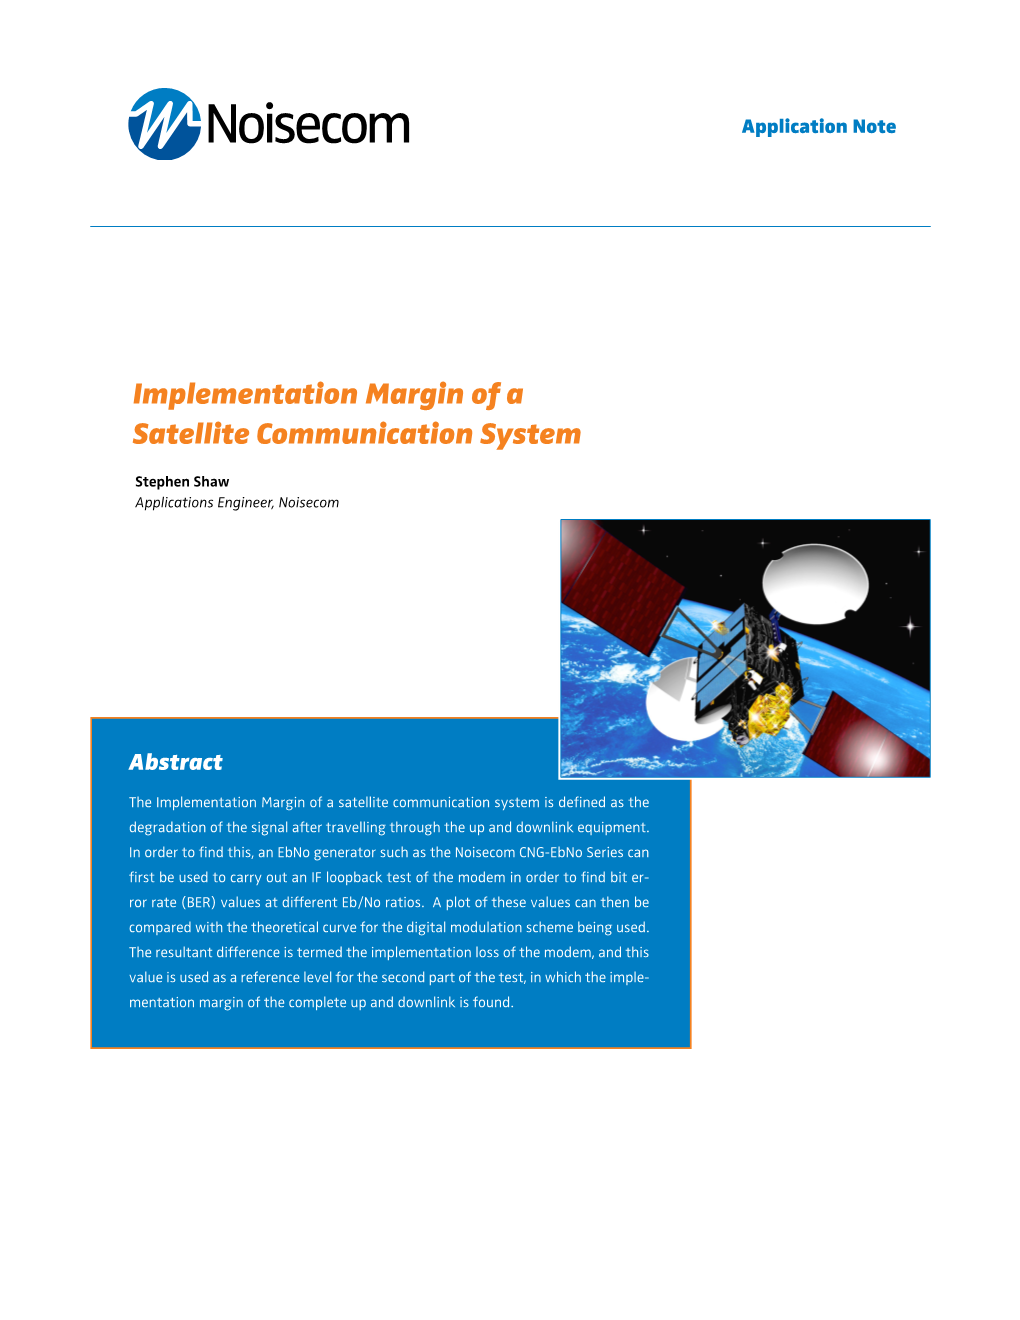 Implementation Margin of a Satellite Communication System